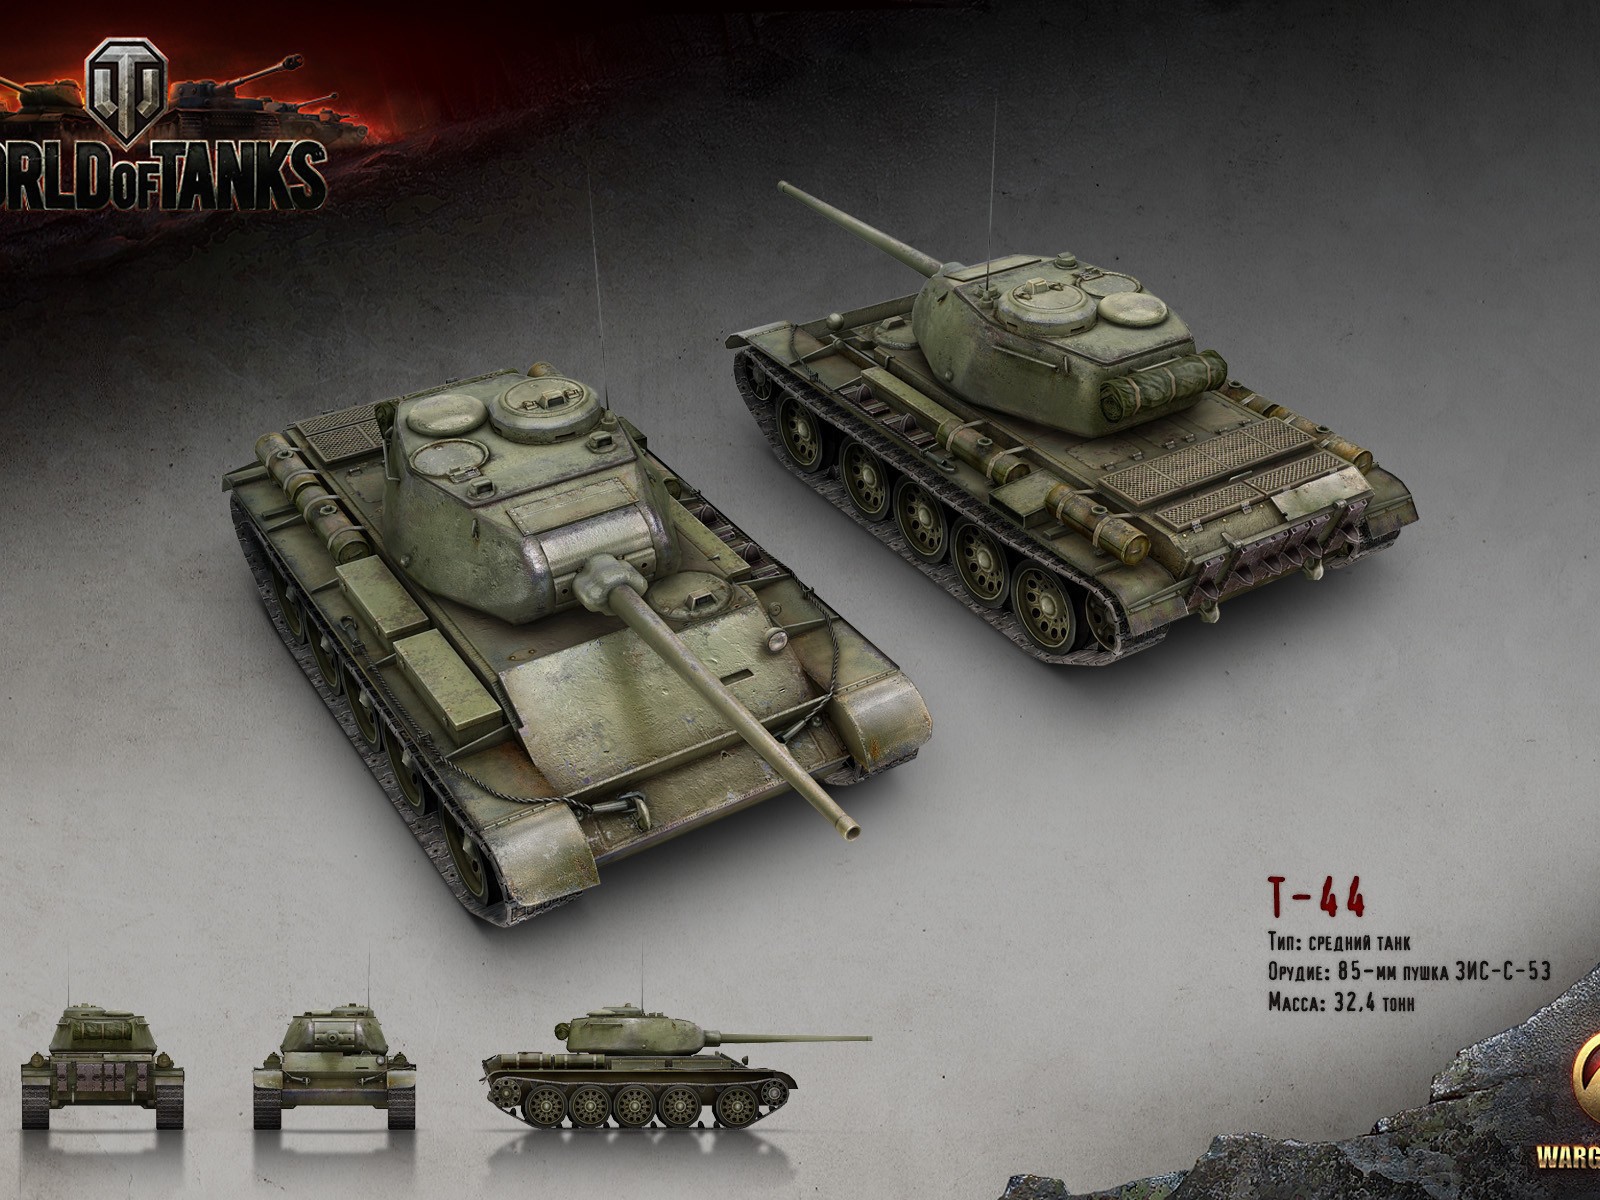 Medium Tank T-44, the game World of Tanks